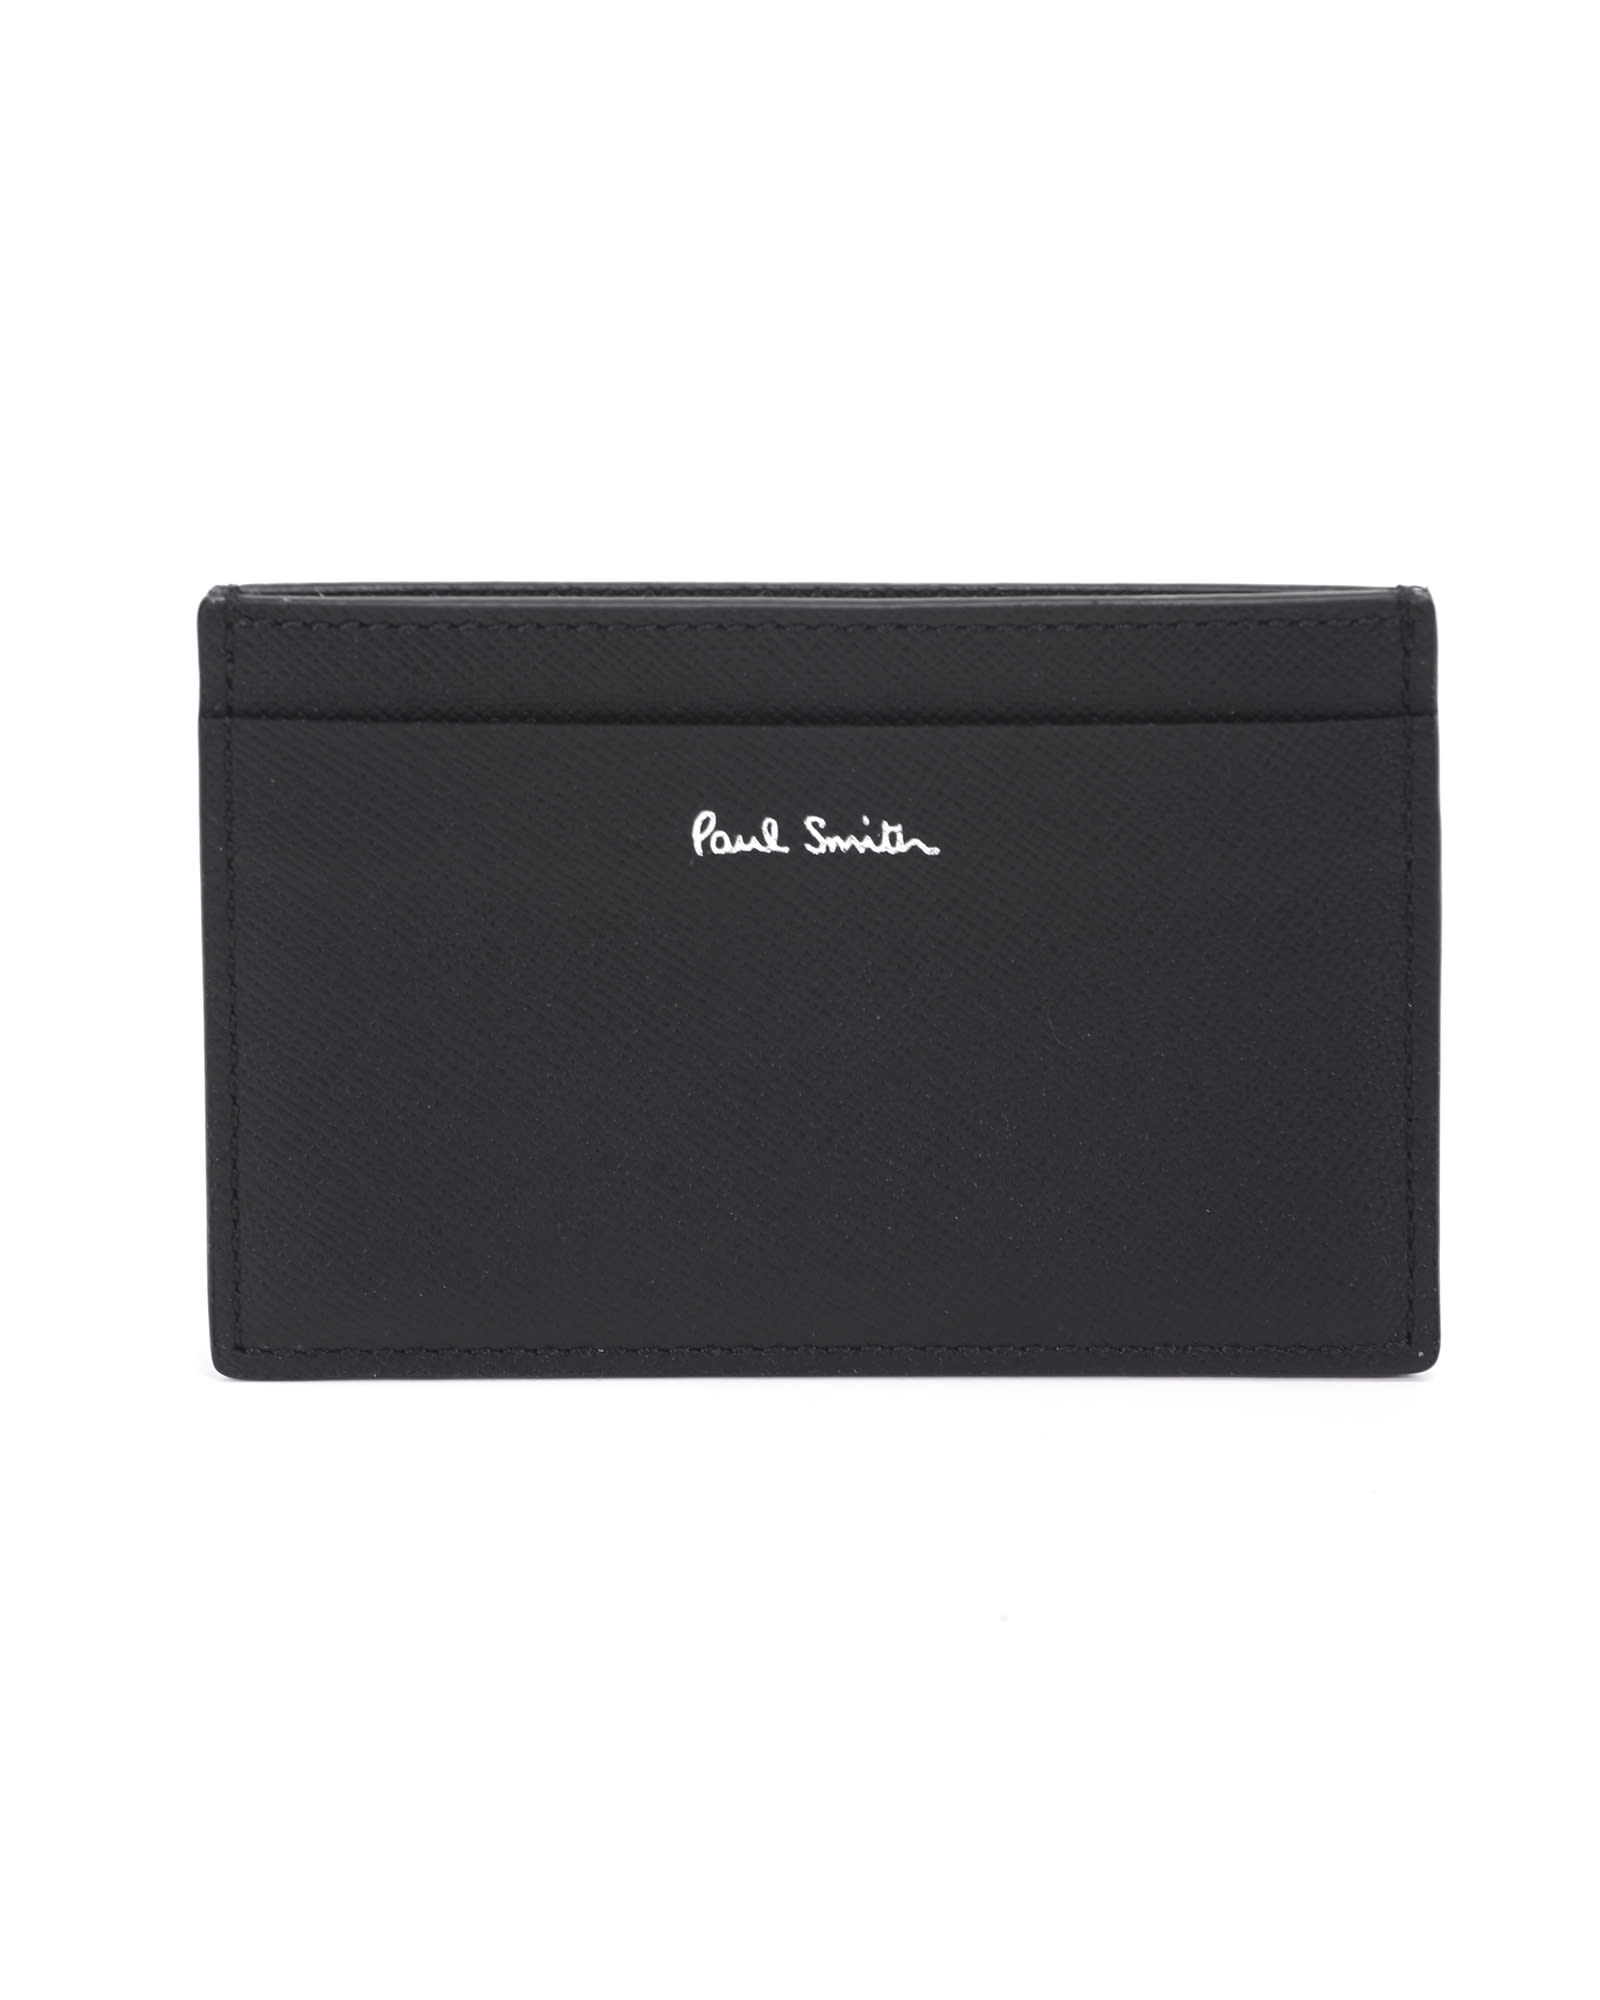 Paul Smith black leather card holder